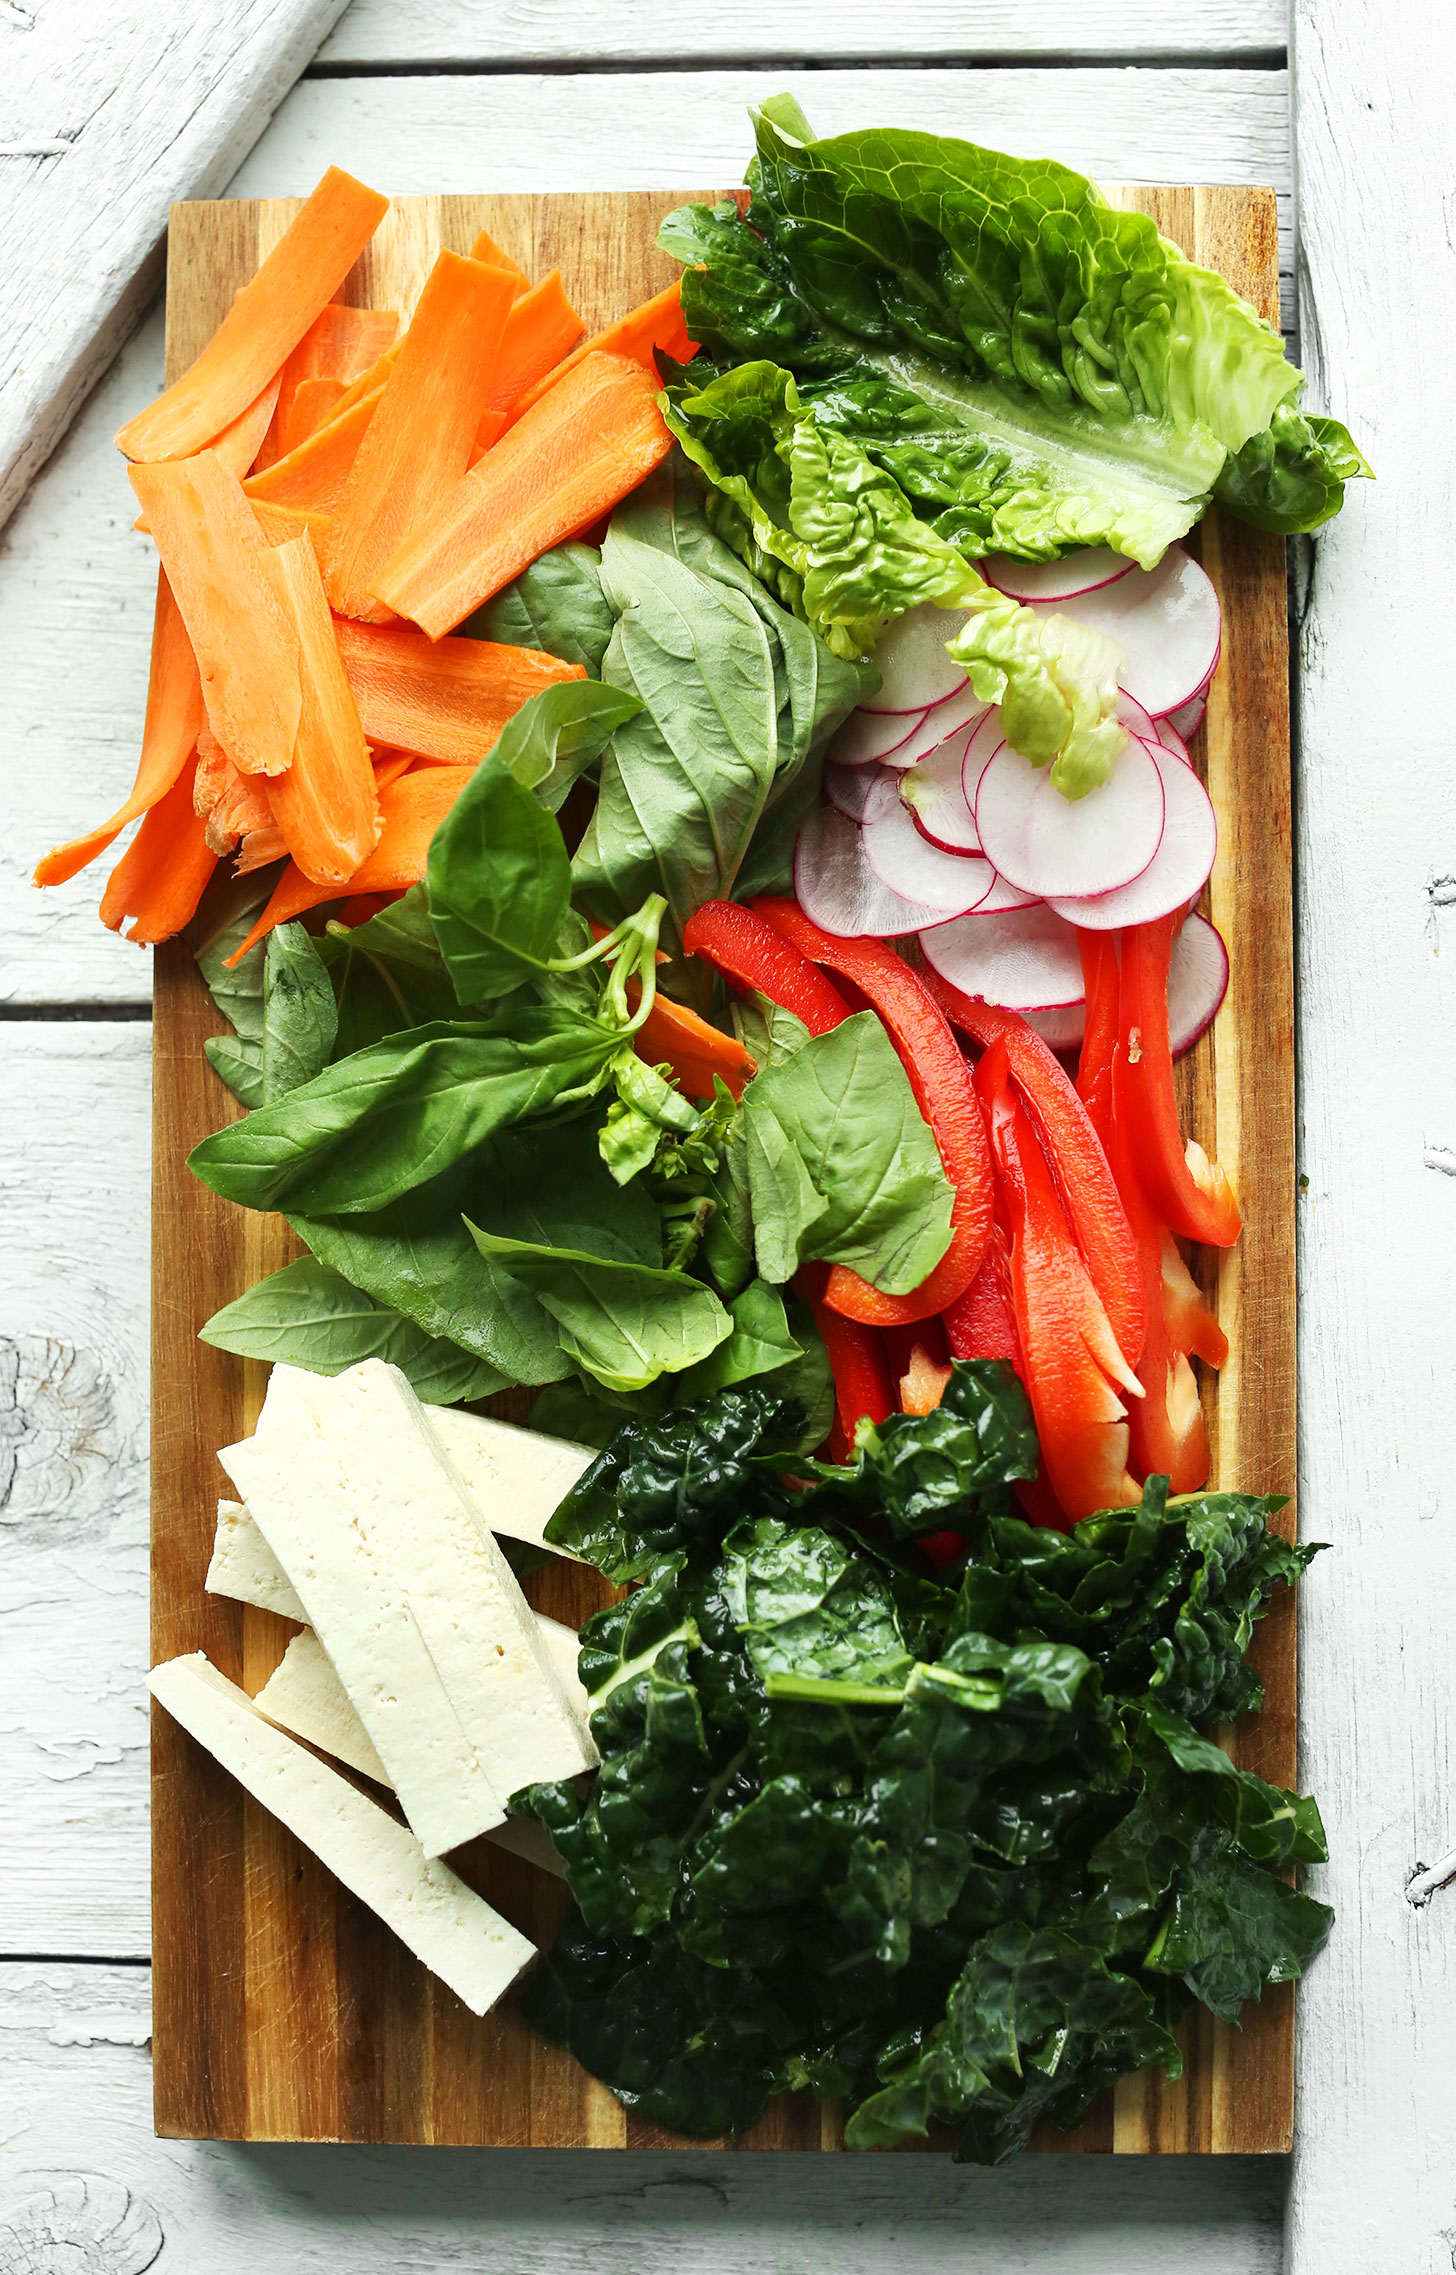 Tofu, kale, basil, bell pepper, radish, lettuce, and carrots on a cutting board